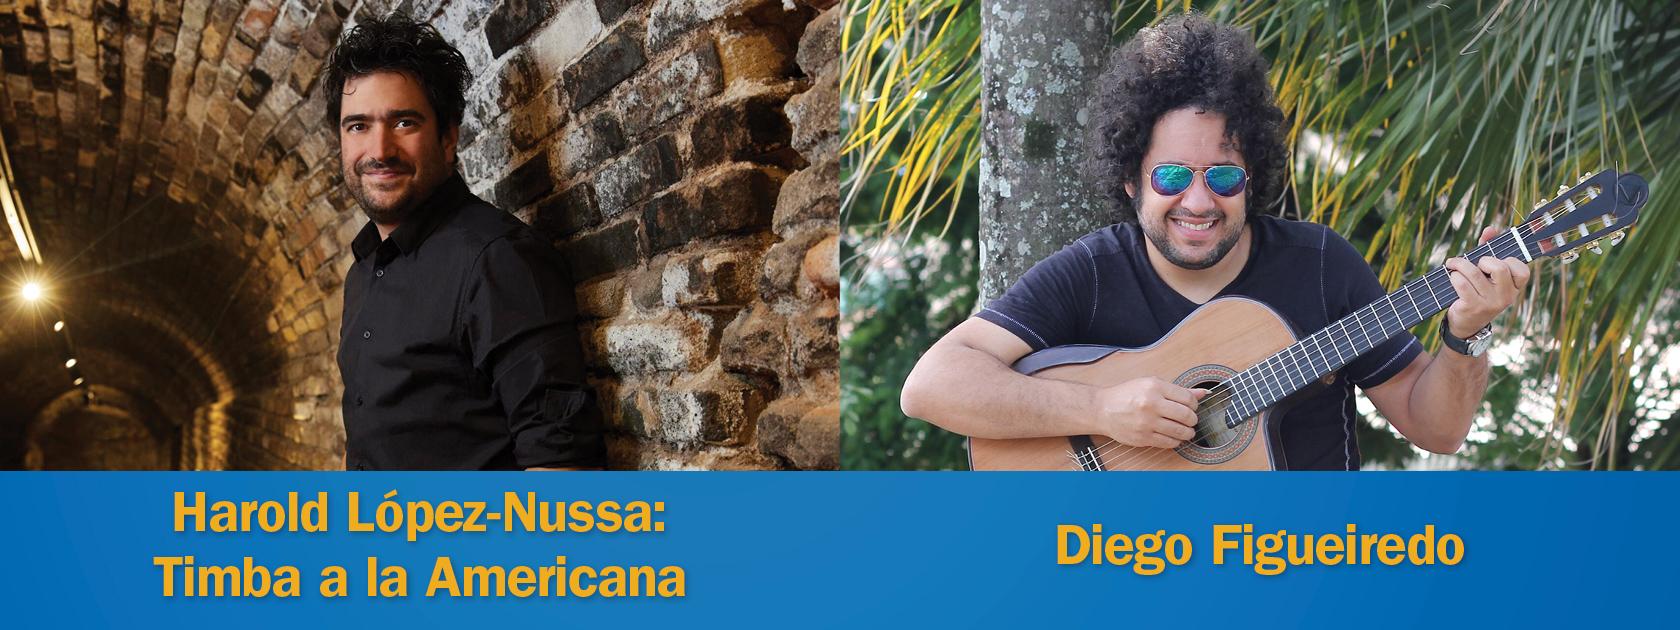 Harold López-Nussa and Diego Figueiredo